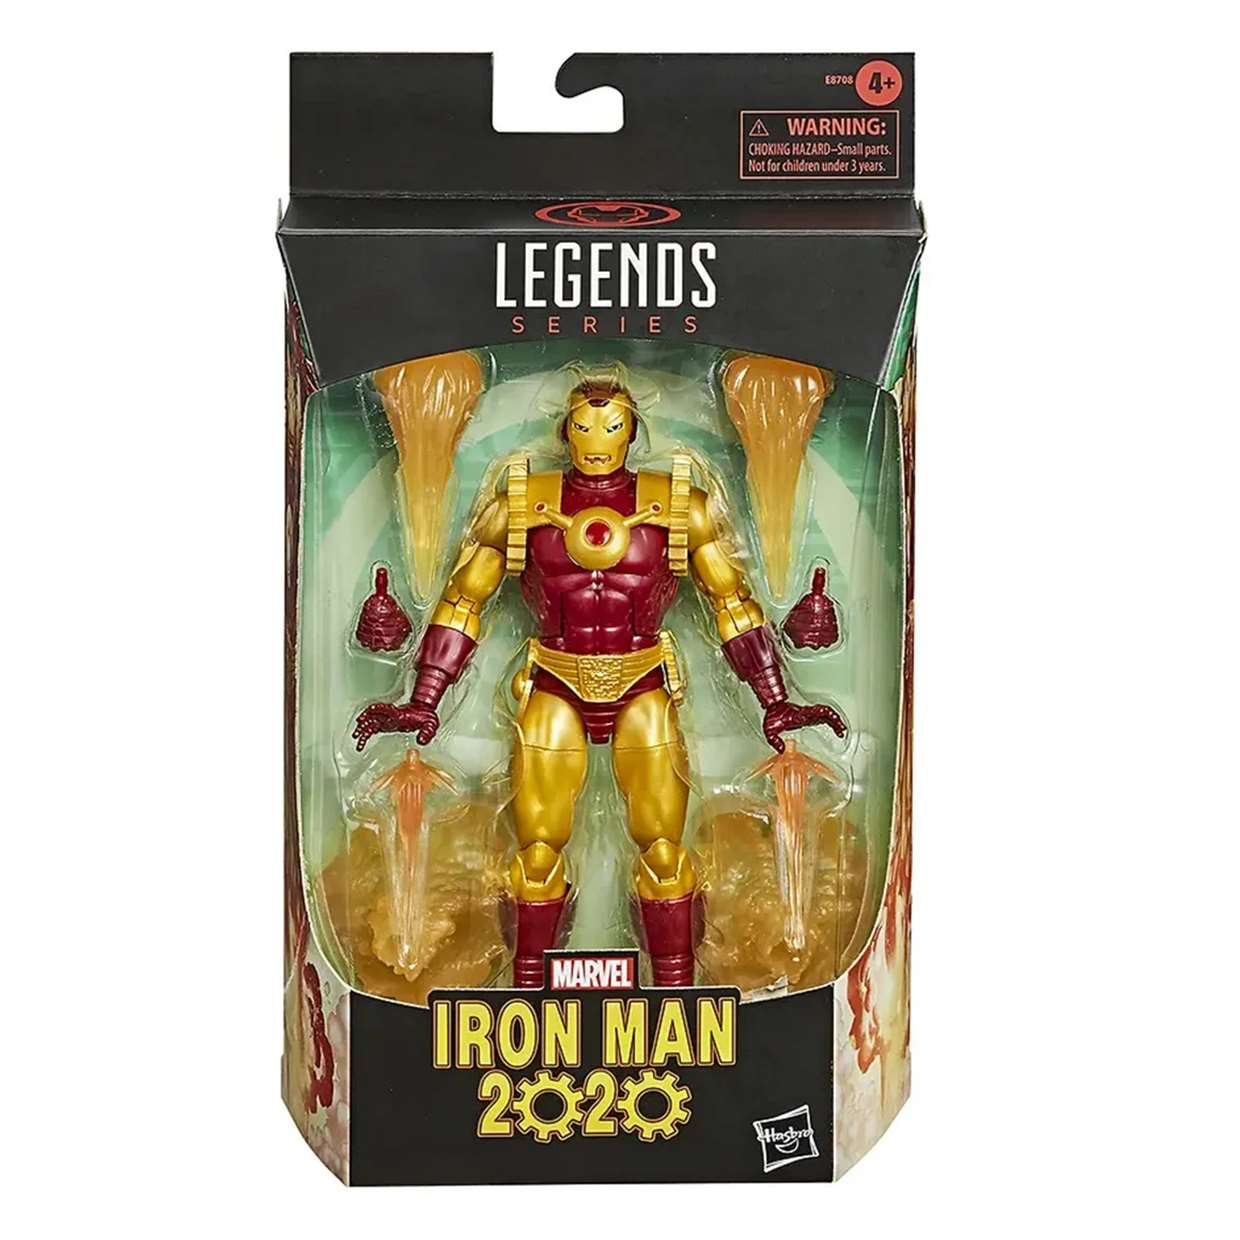 Iron Man 2020 Legends Series + Iron Man #04 Cilindro Gratis!